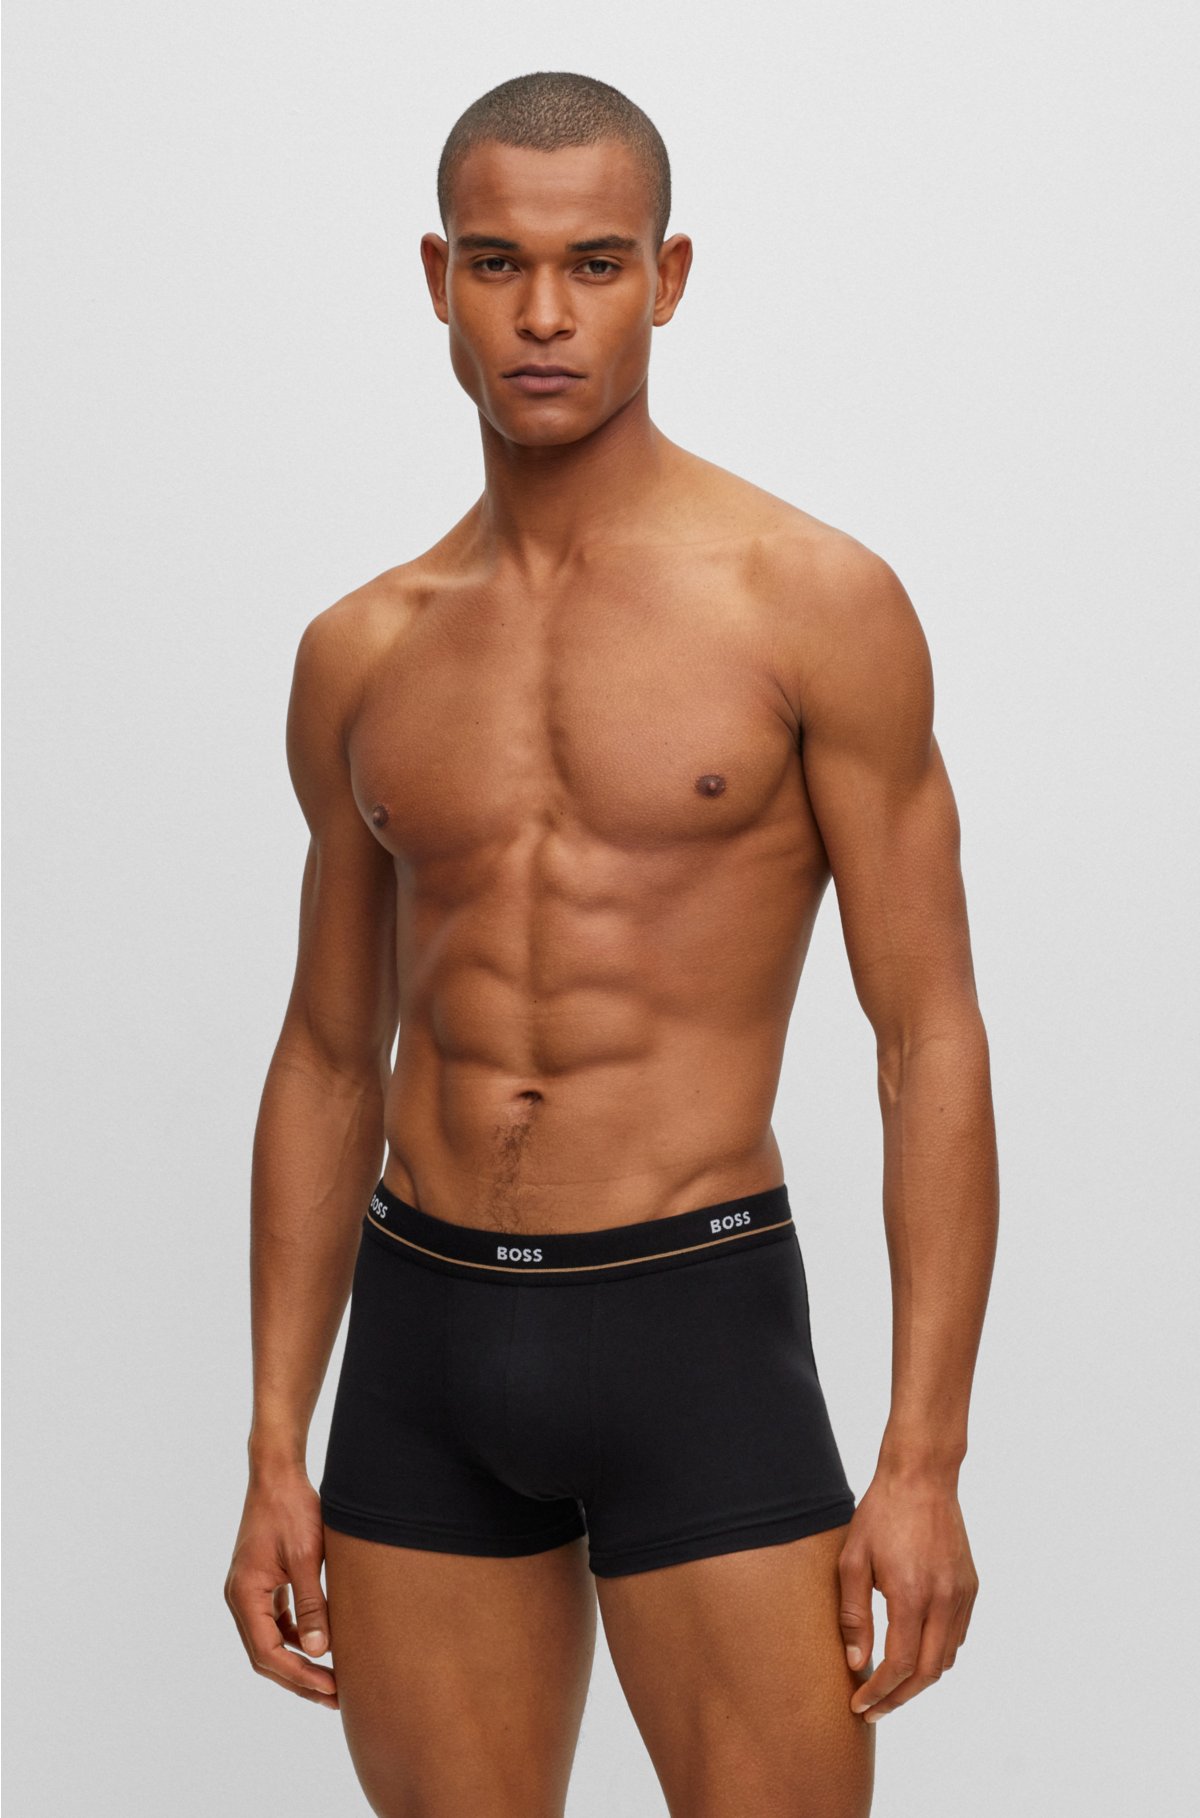 DIM Men's Ecodim Comfortable Stretch Cotton Black Boxers, M (Pack